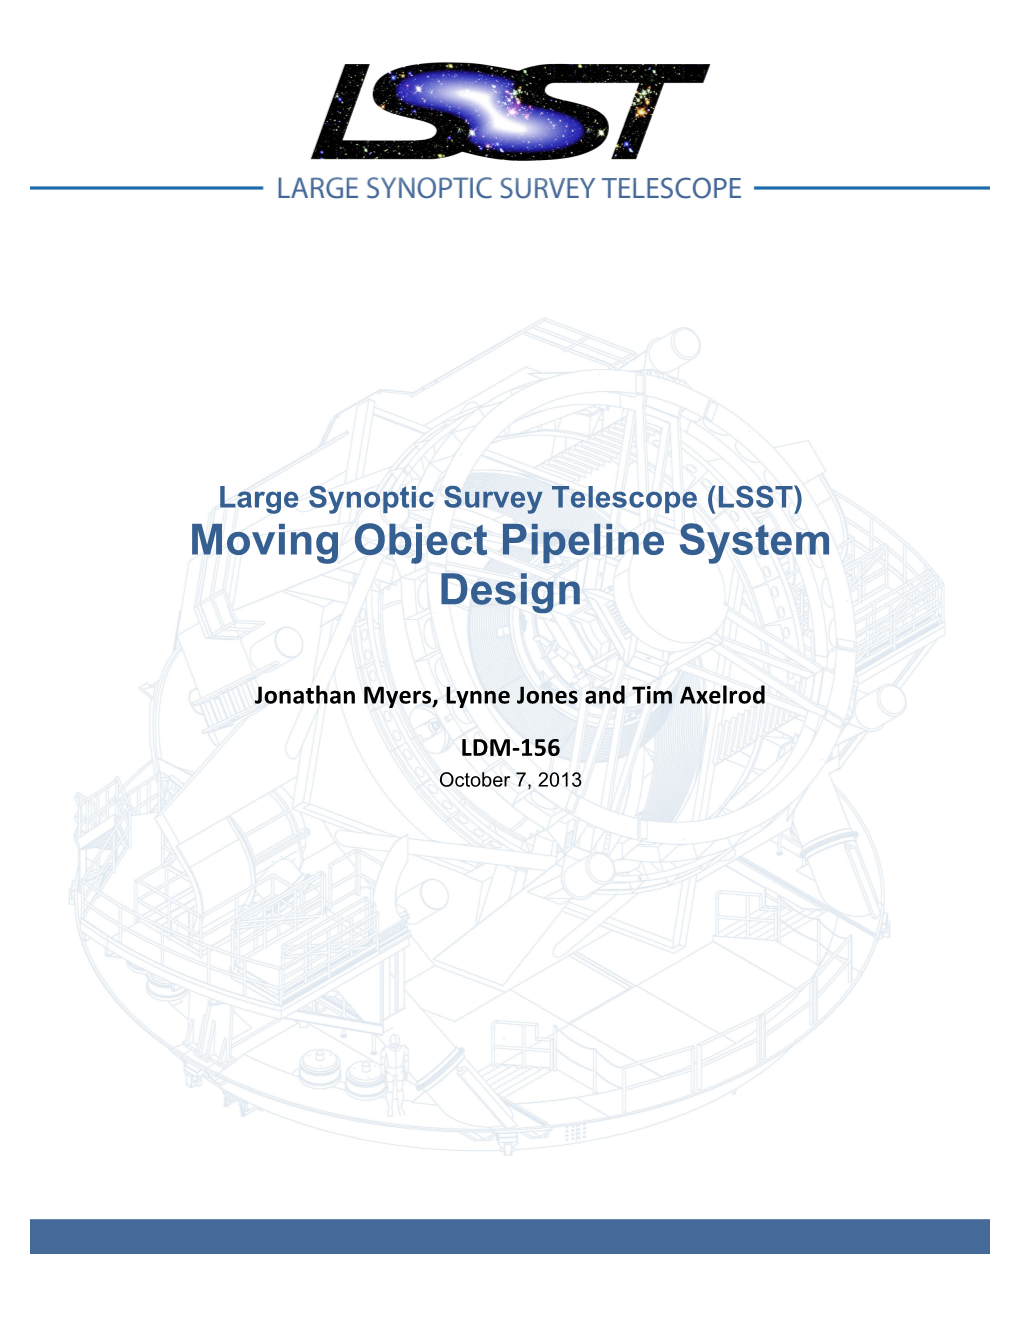 (LSST) Moving Object Pipeline System Design